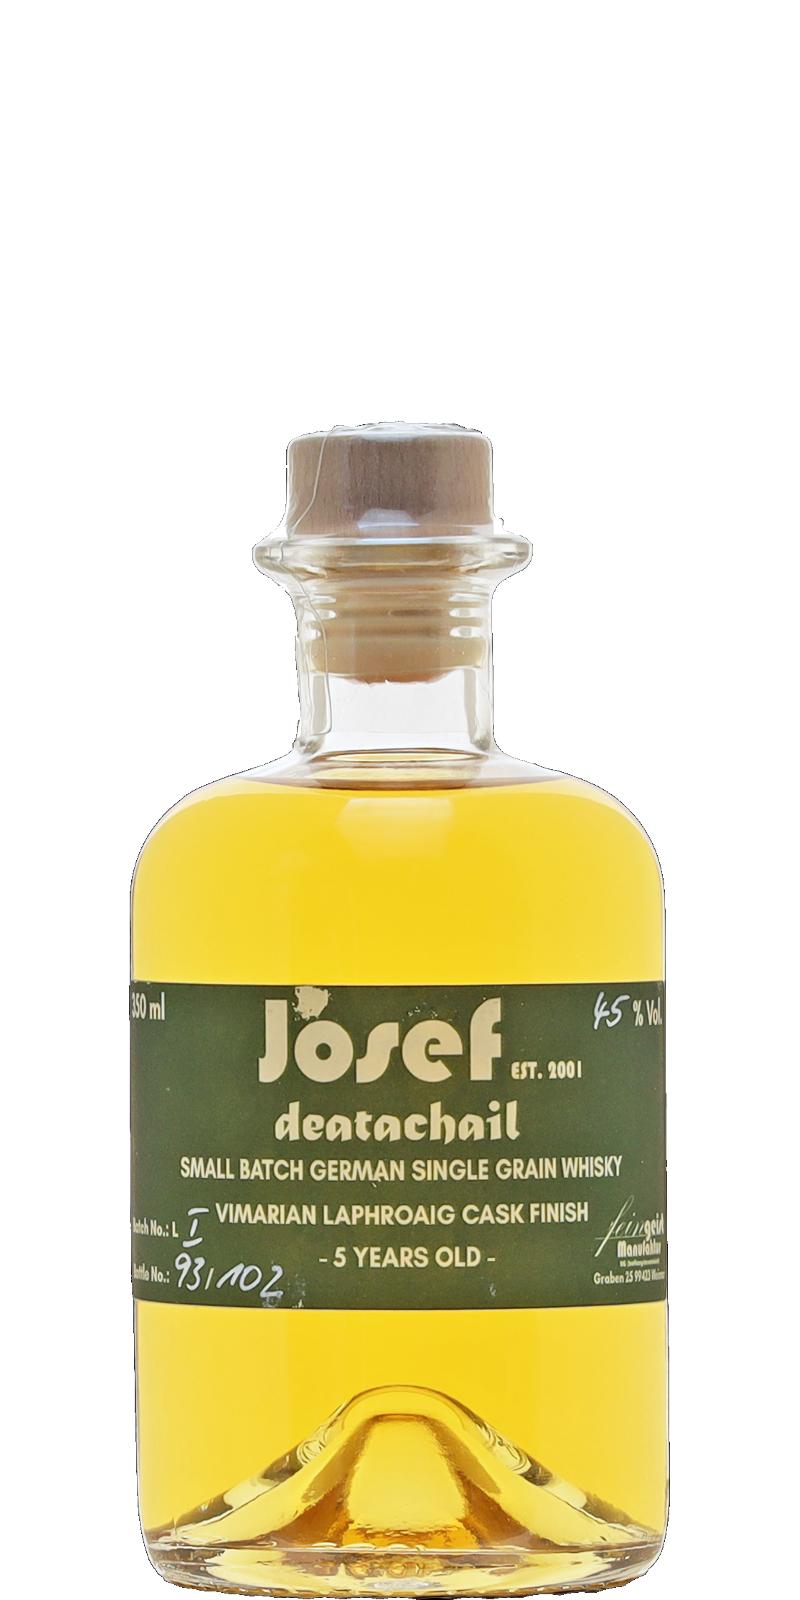 Josef 5yo FeMa Small Batch German Single Grain Whisky Vimarian Laphroaig Cask Finish 45% 350ml